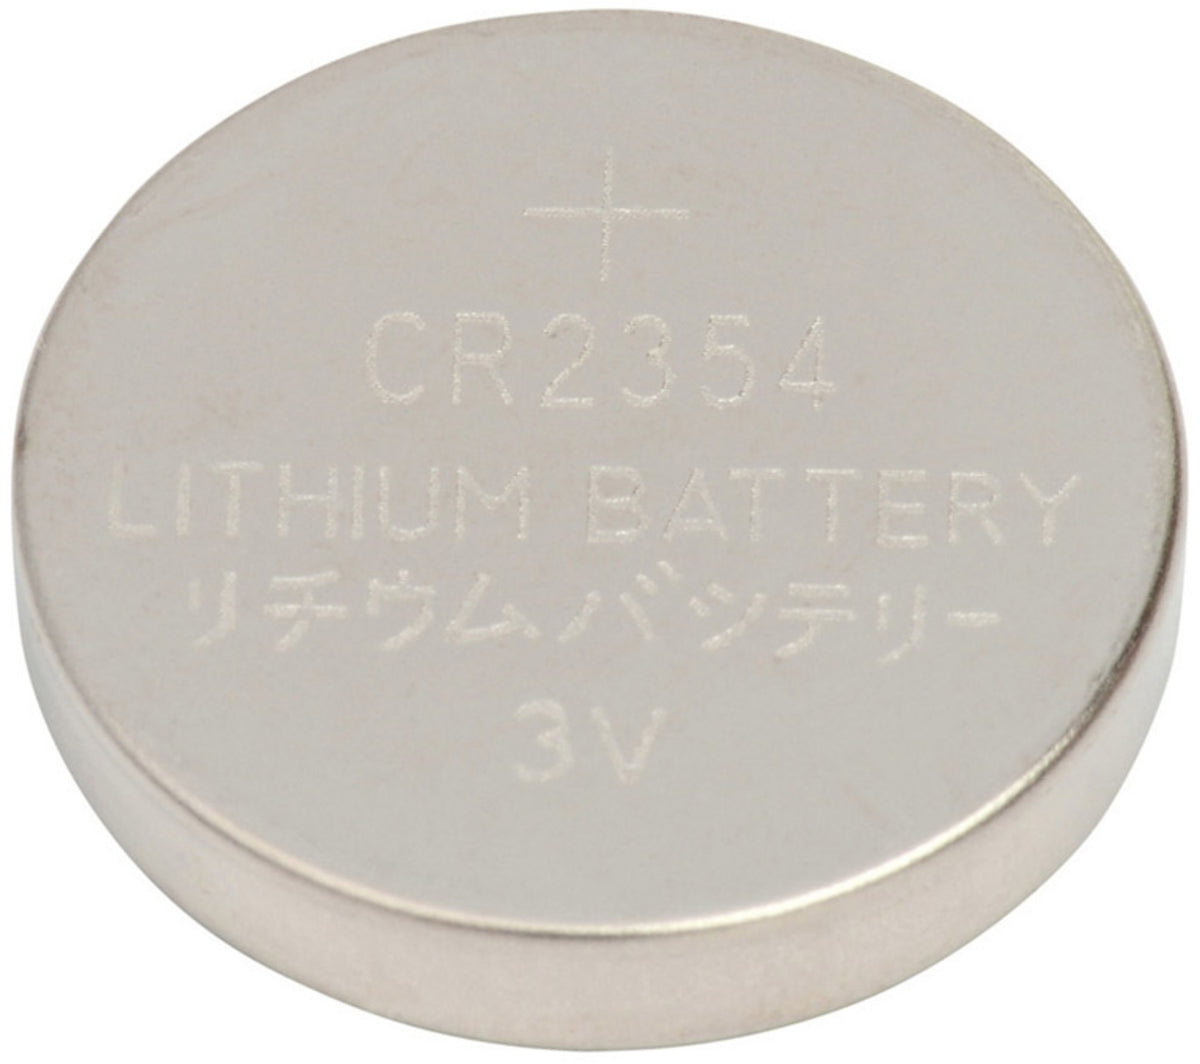 Ultralast UL2354 Lithium Keyless Entry Battery, 3 Volt